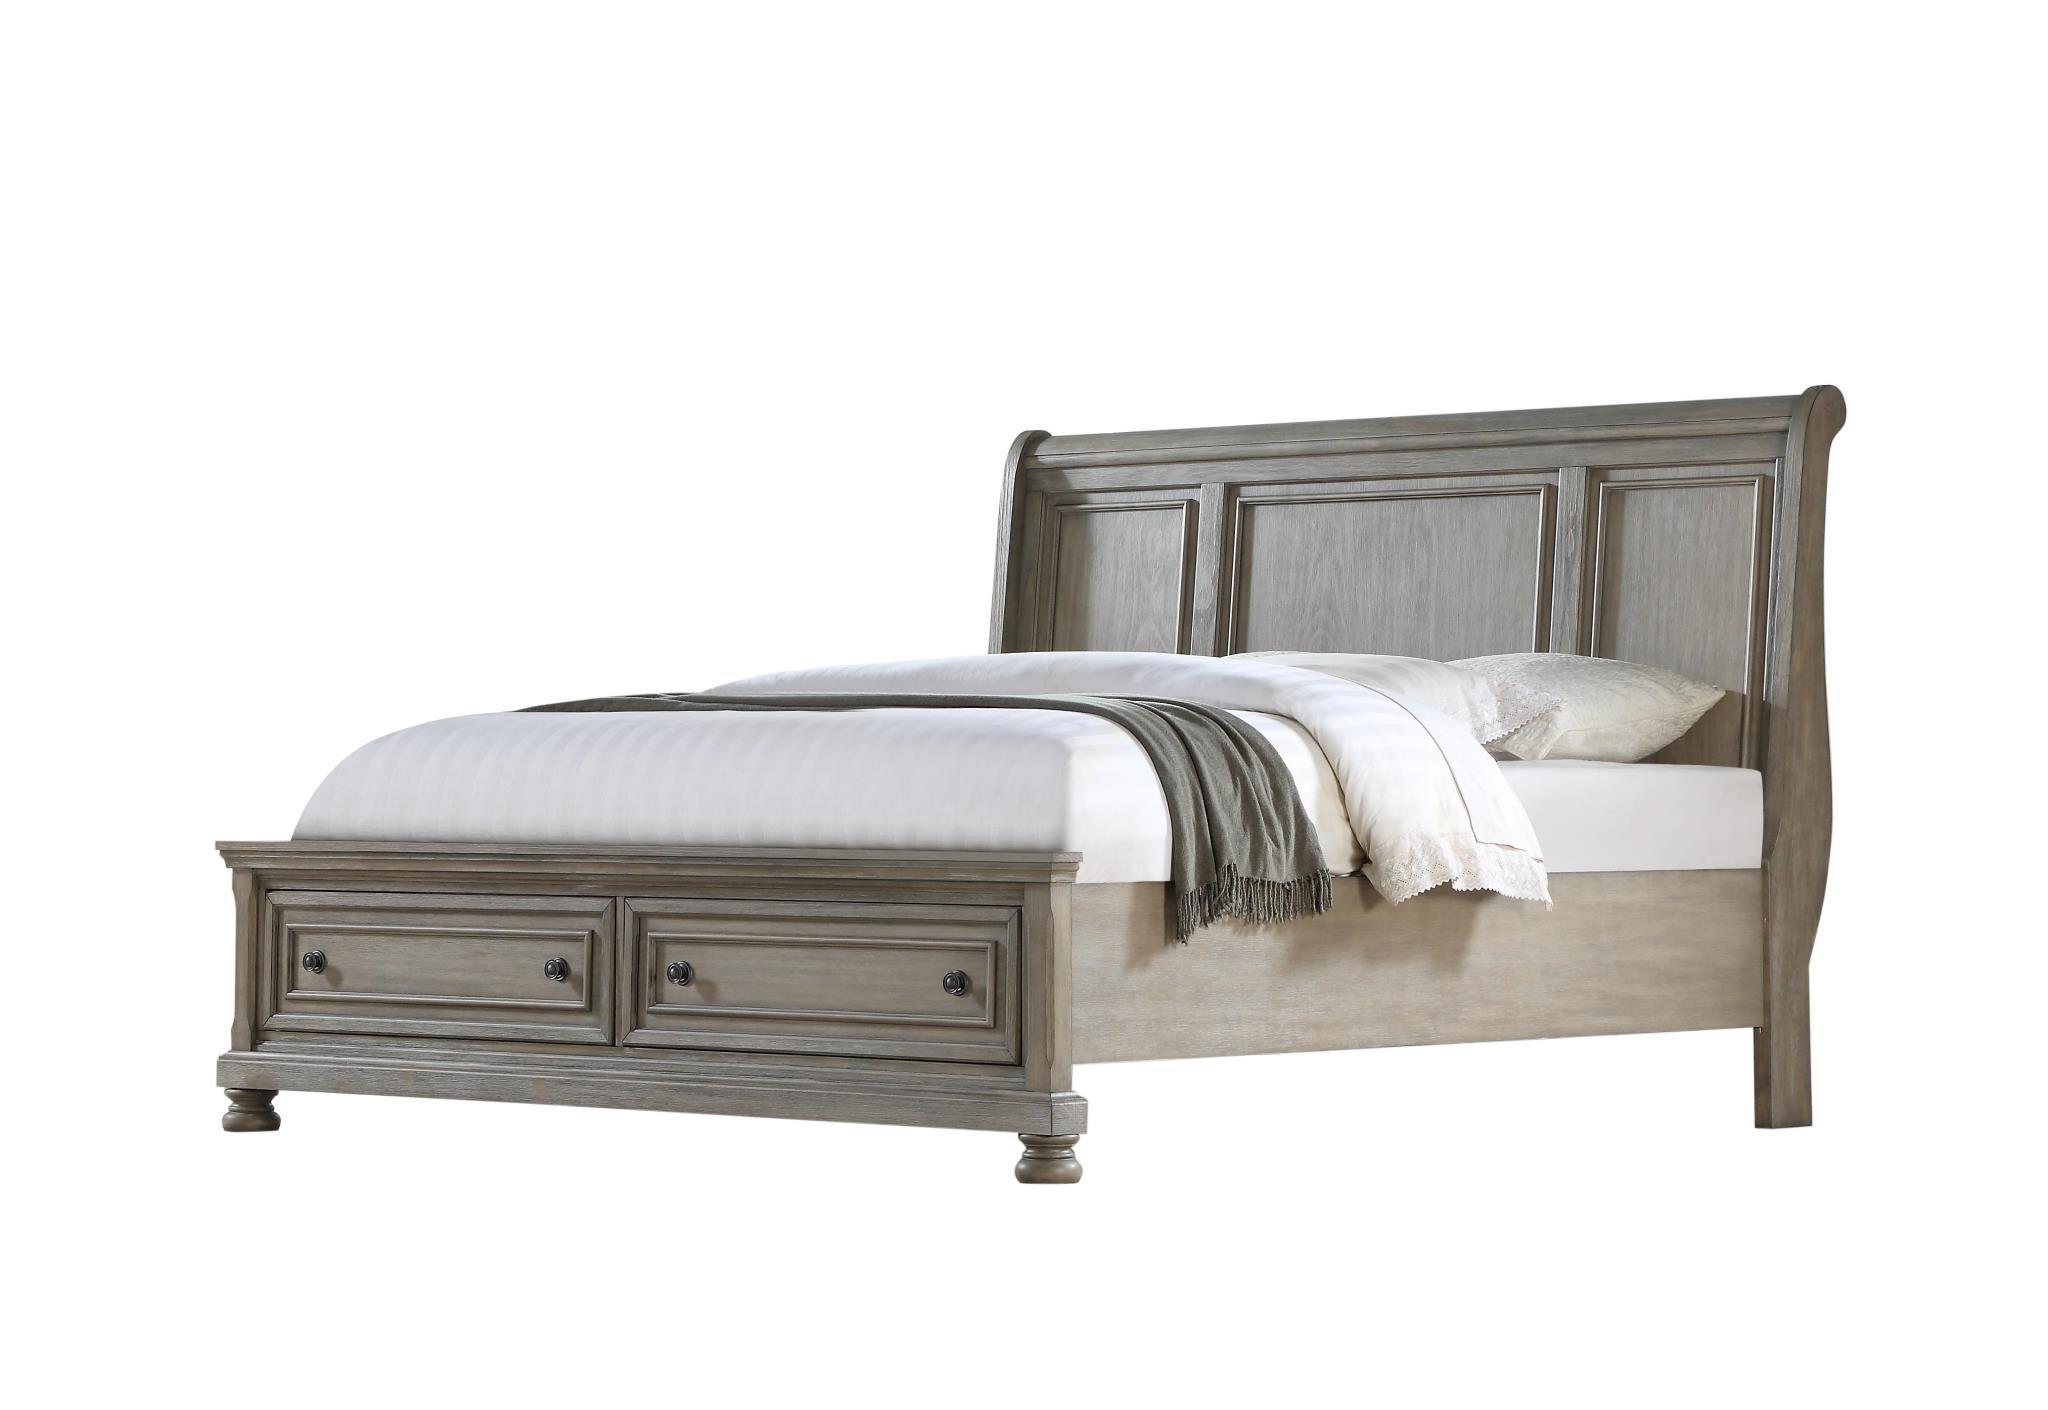 Traditional, Casual Storage Bedroom Set PRESCOTT 1070-105 1070-105 in Gray 